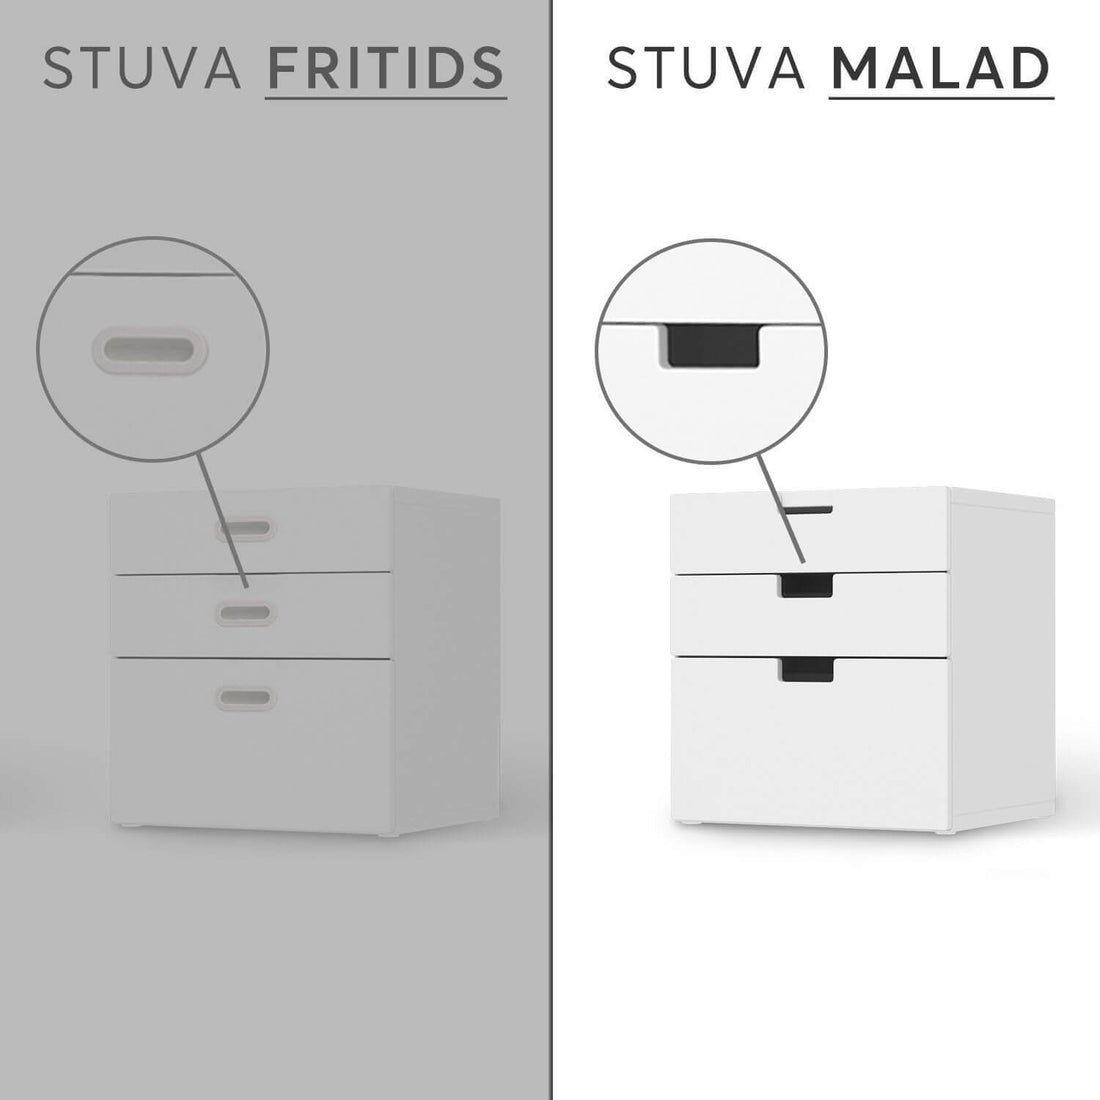 Folie für Möbel IKEA Stuva / Malad Kommode - 3 Schubladen - Design: Niagara Falls